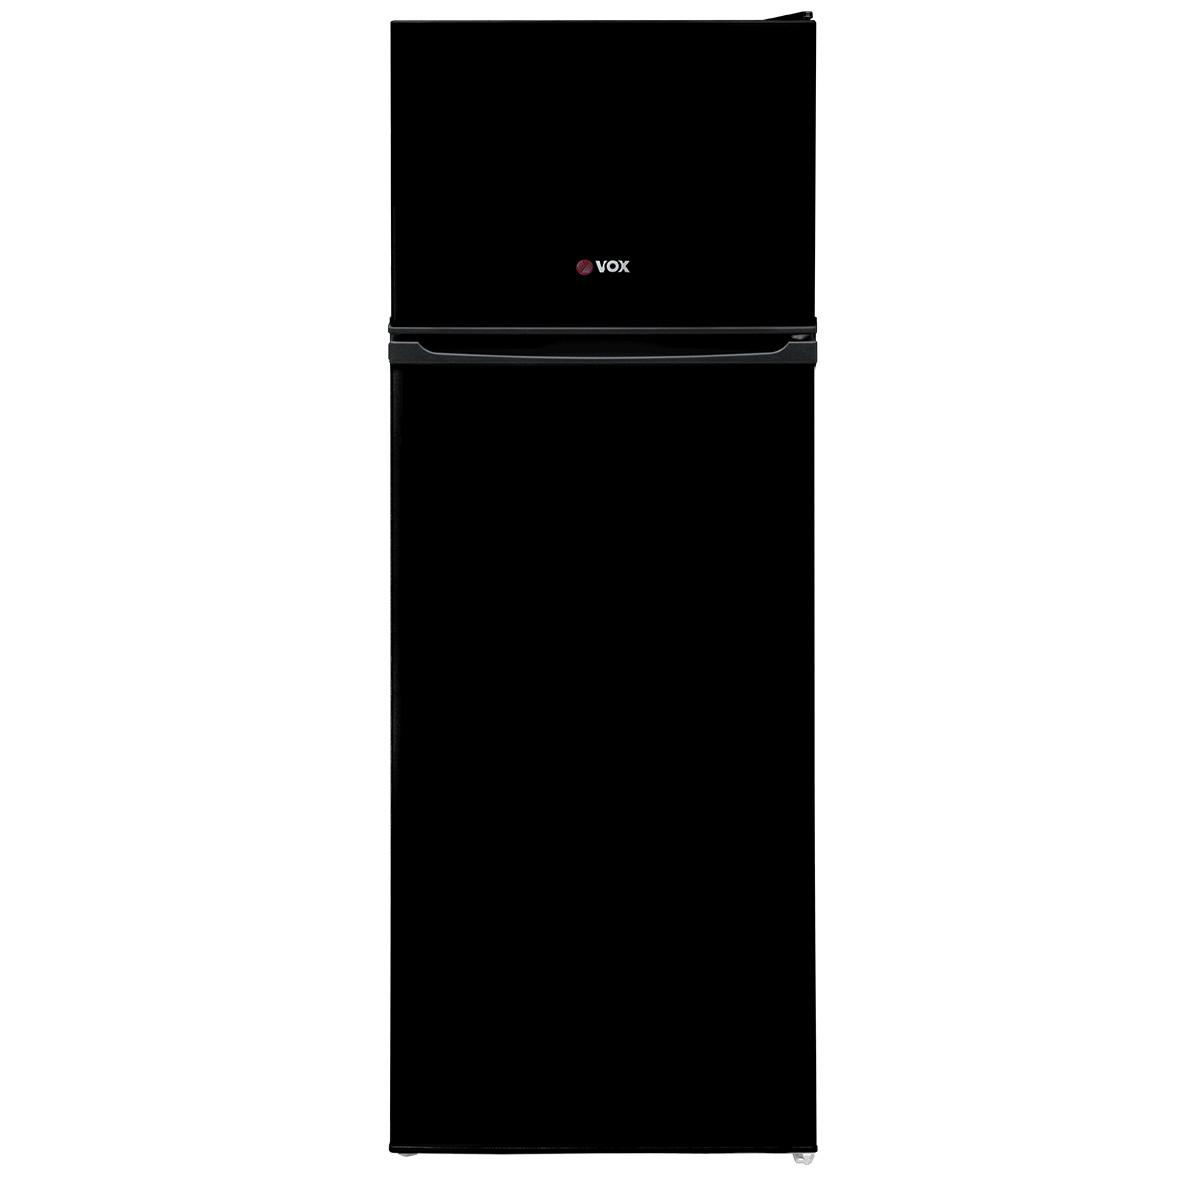 VOX Комбиниран фрижидер KG 2500BF